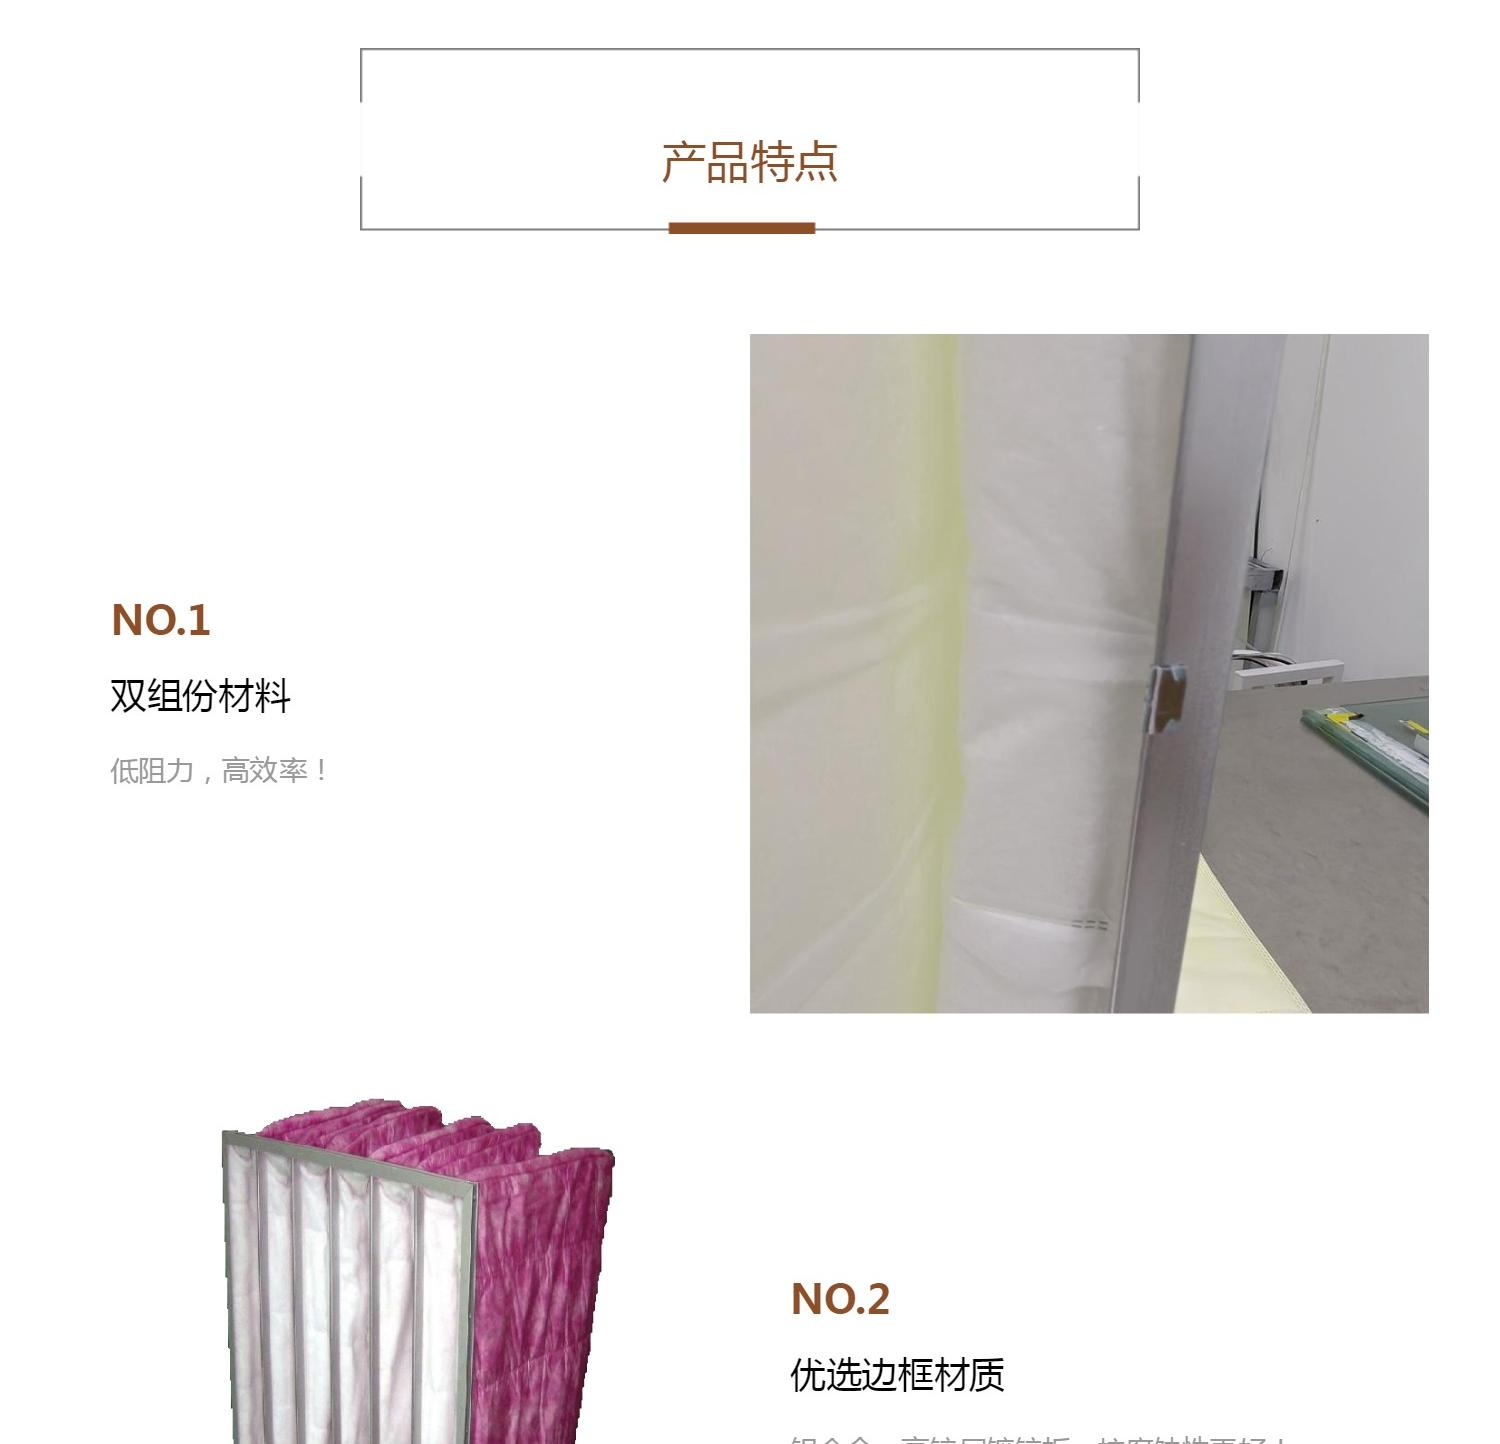 Kangjiu Purification Medium Efficiency Bag Filter Composite Fiber Cotton Filter Bag 2.5 Times Initial Resistance